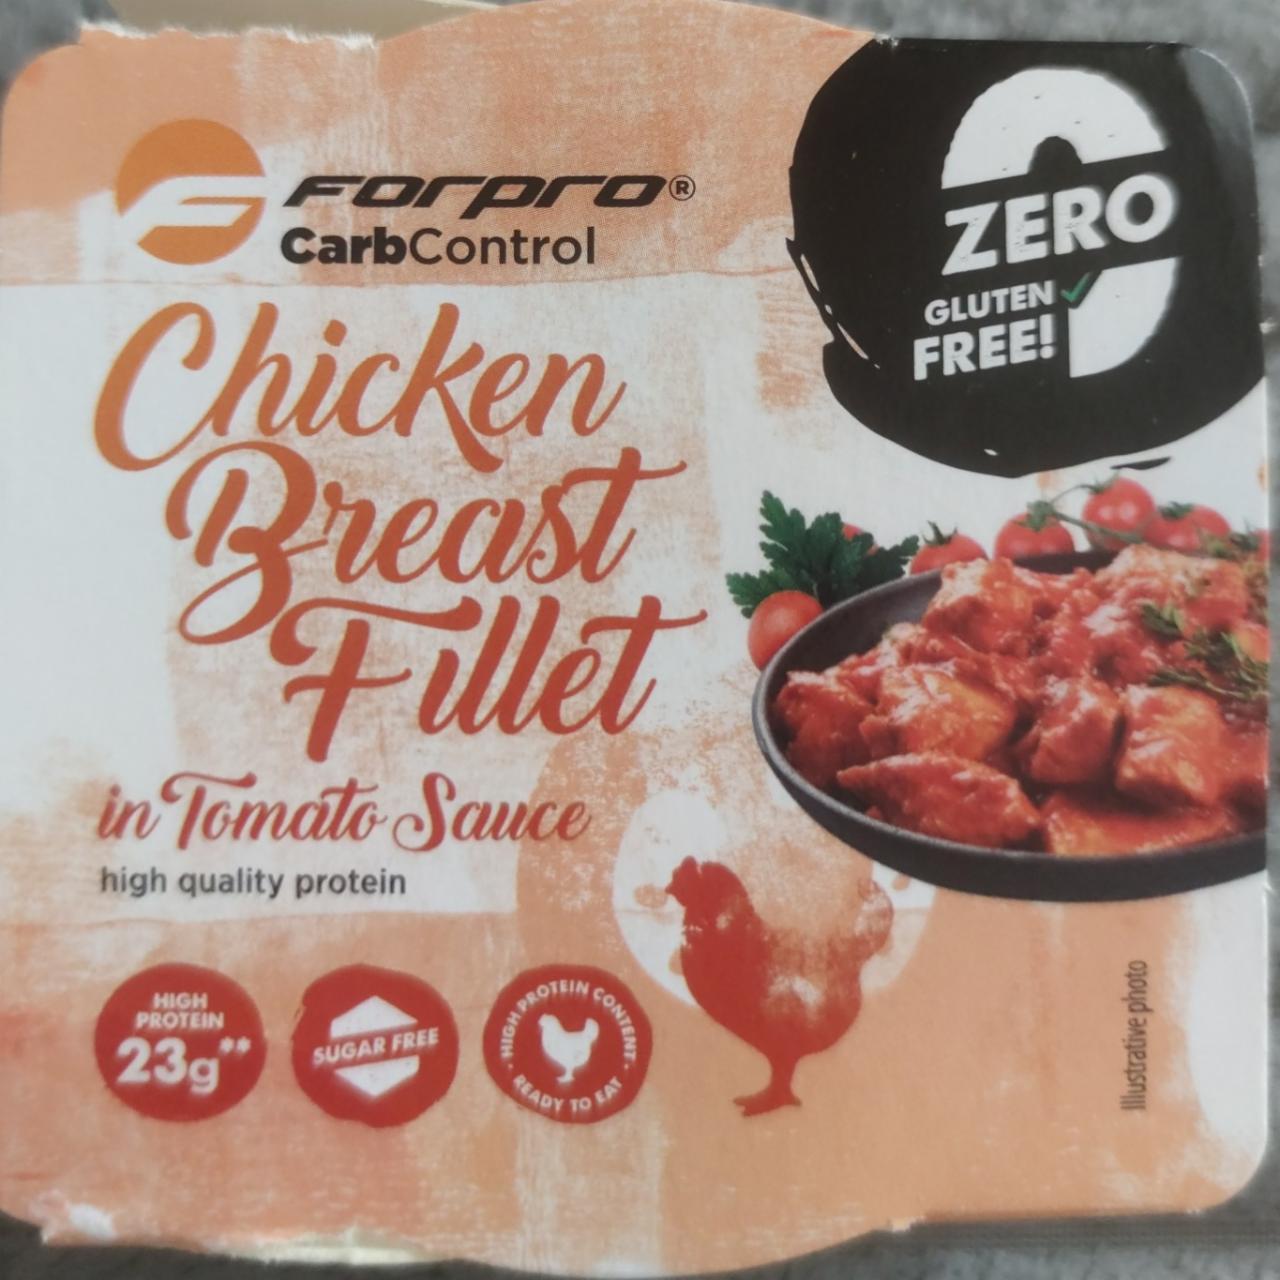 Fotografie - Chicken breast fillet in tomato sauce Forpro